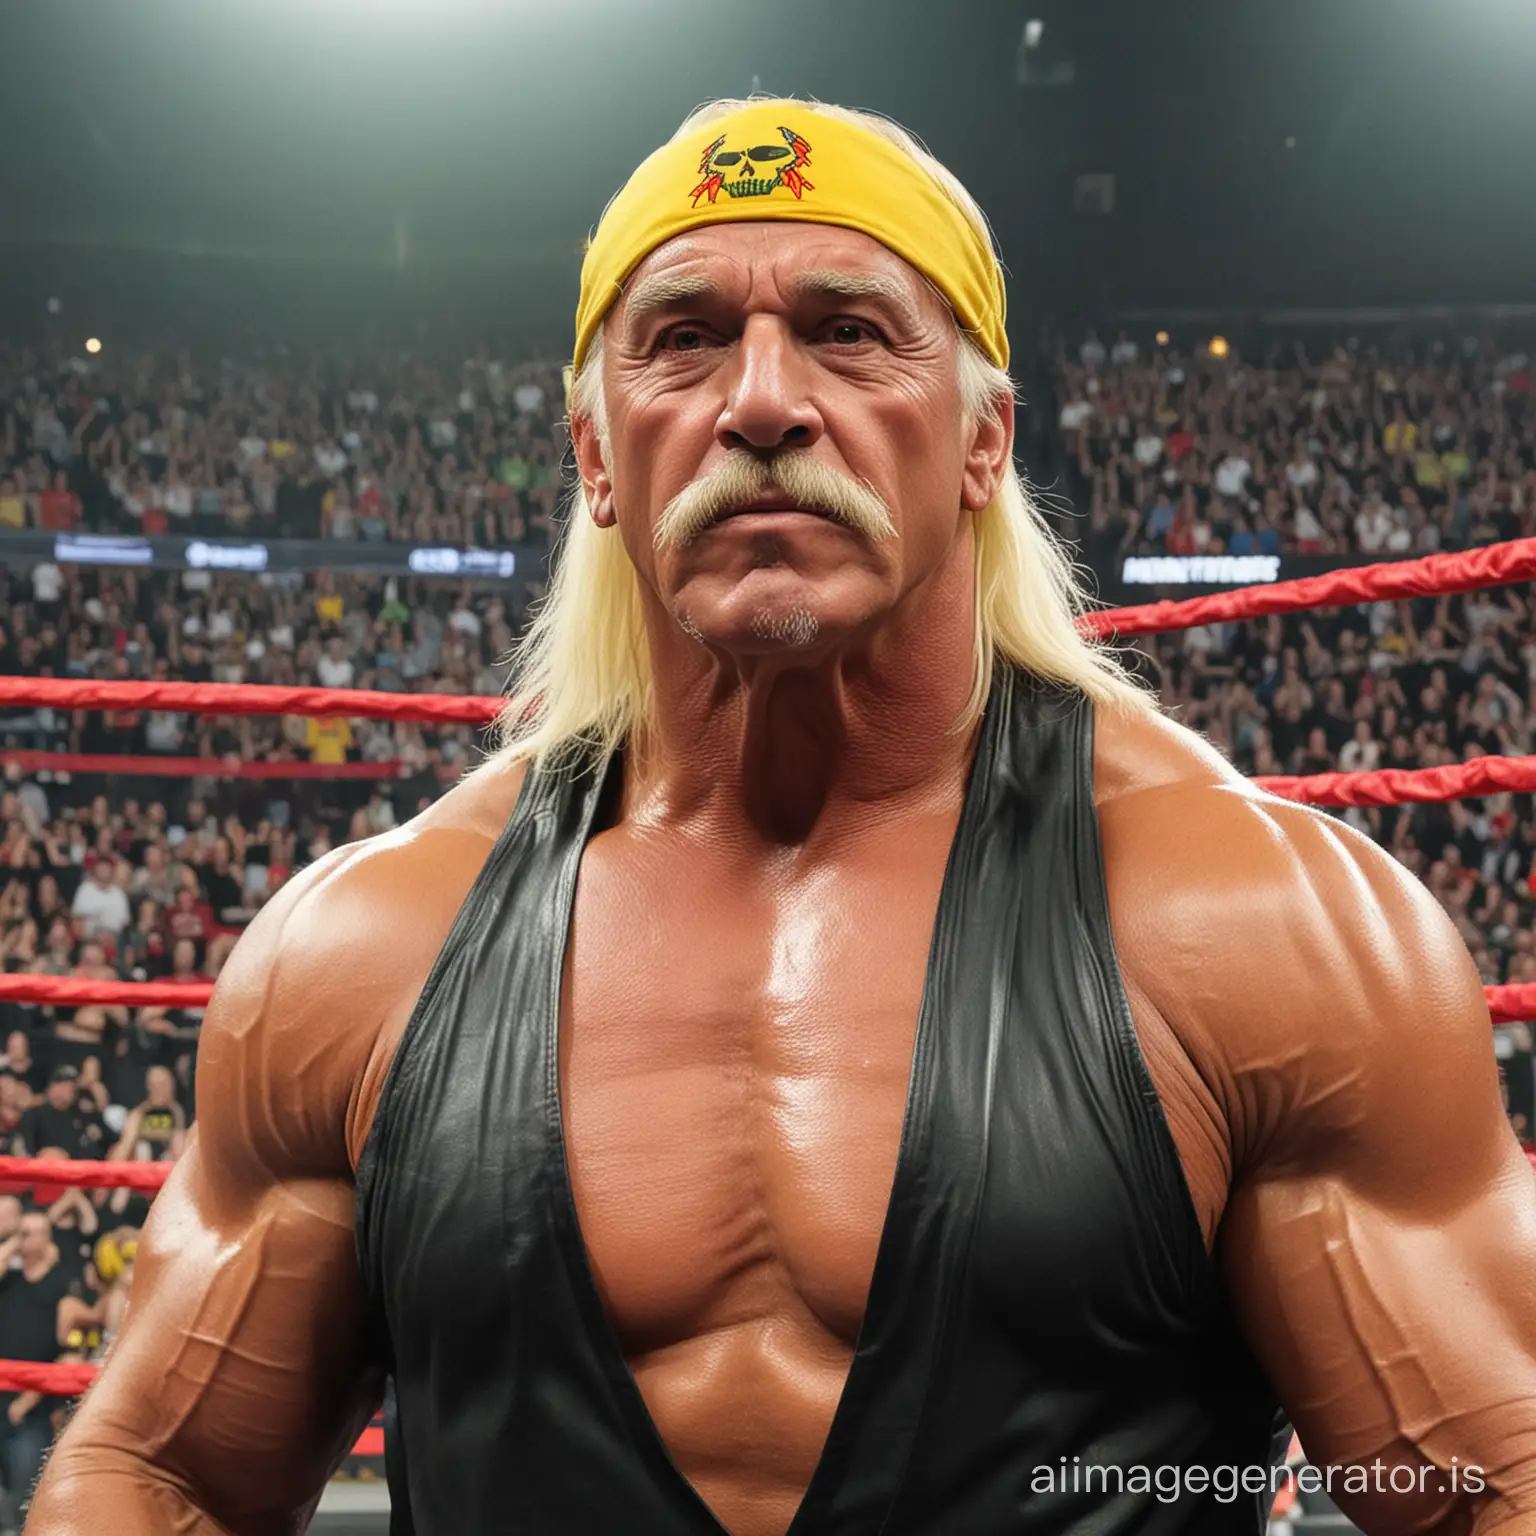 Wresrltler Hulk Hogan in arena